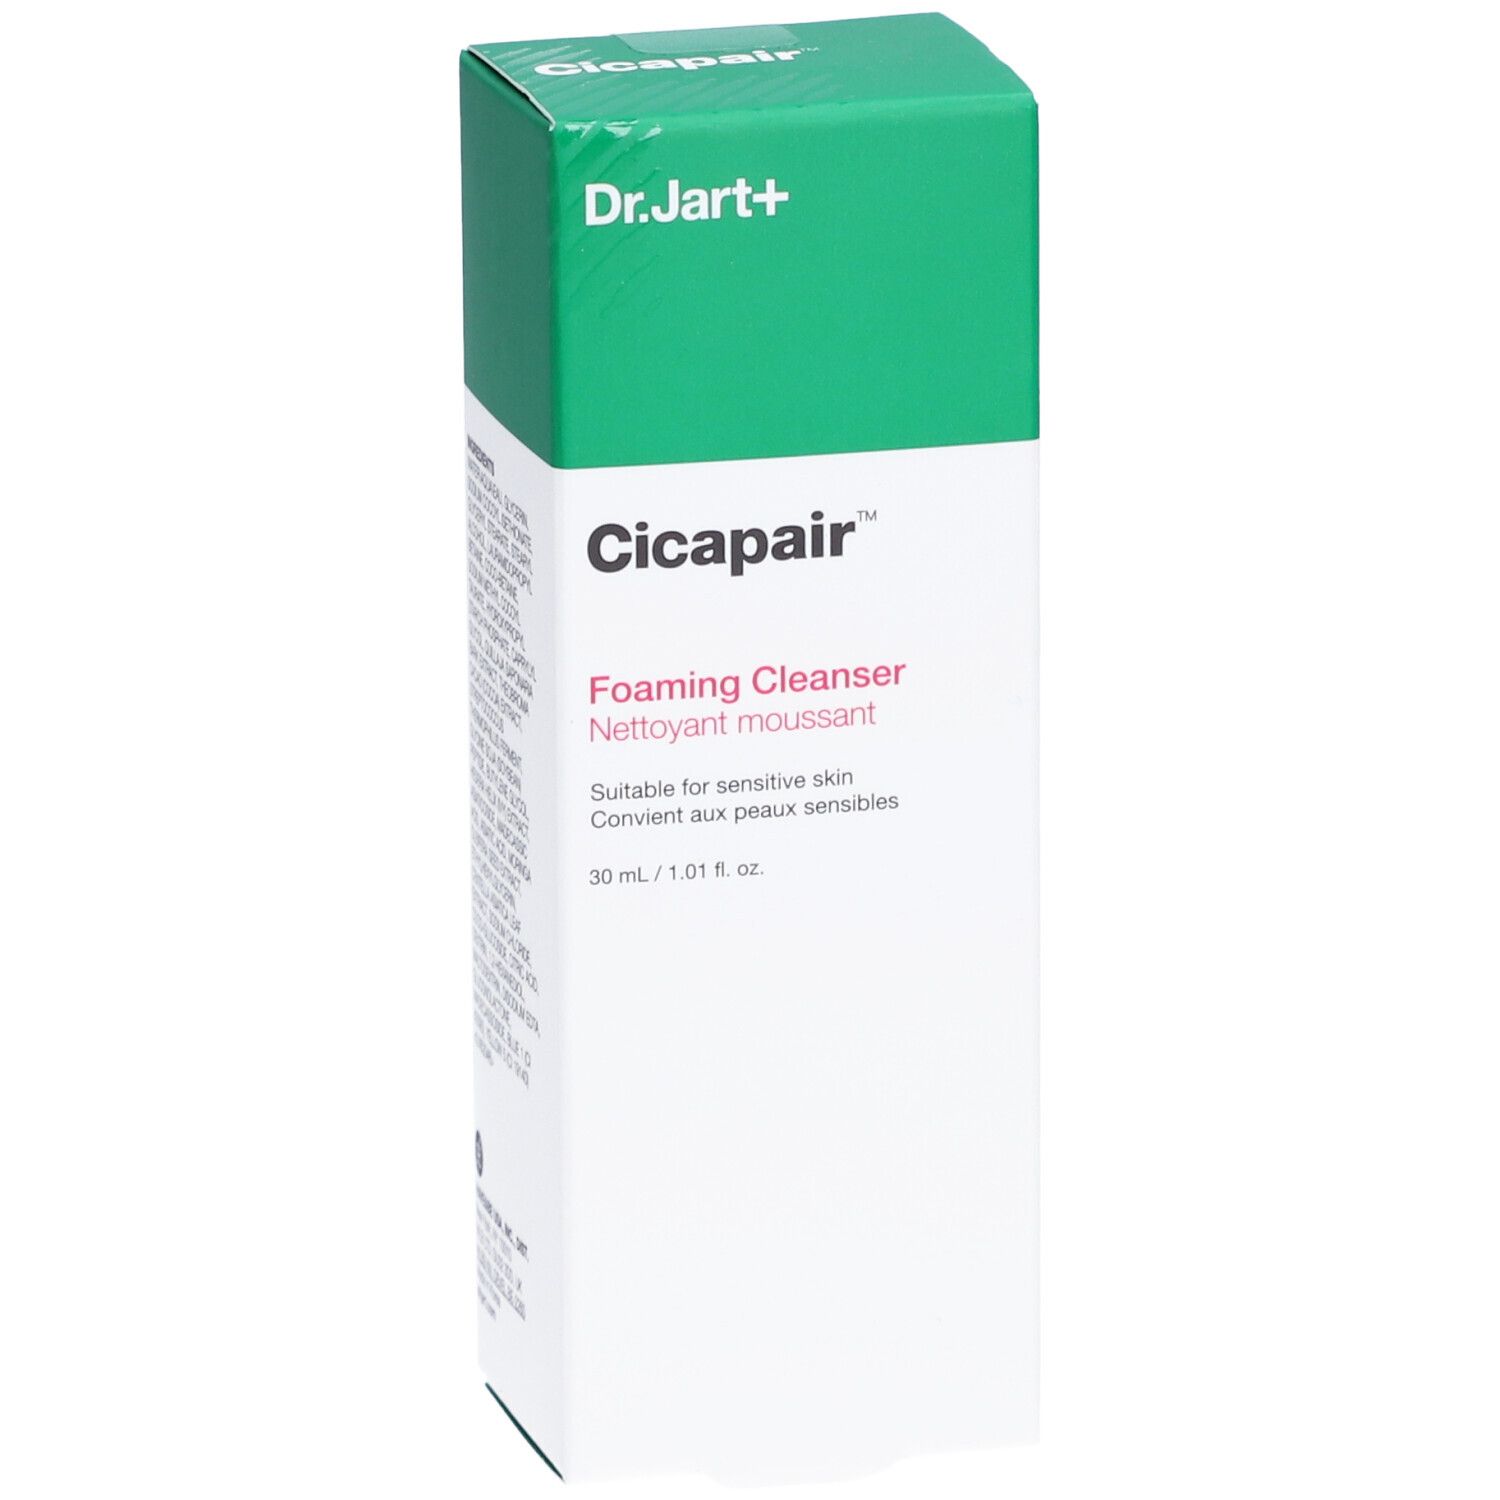 Dr.Jart+ Cicapair Foaming Cleanser